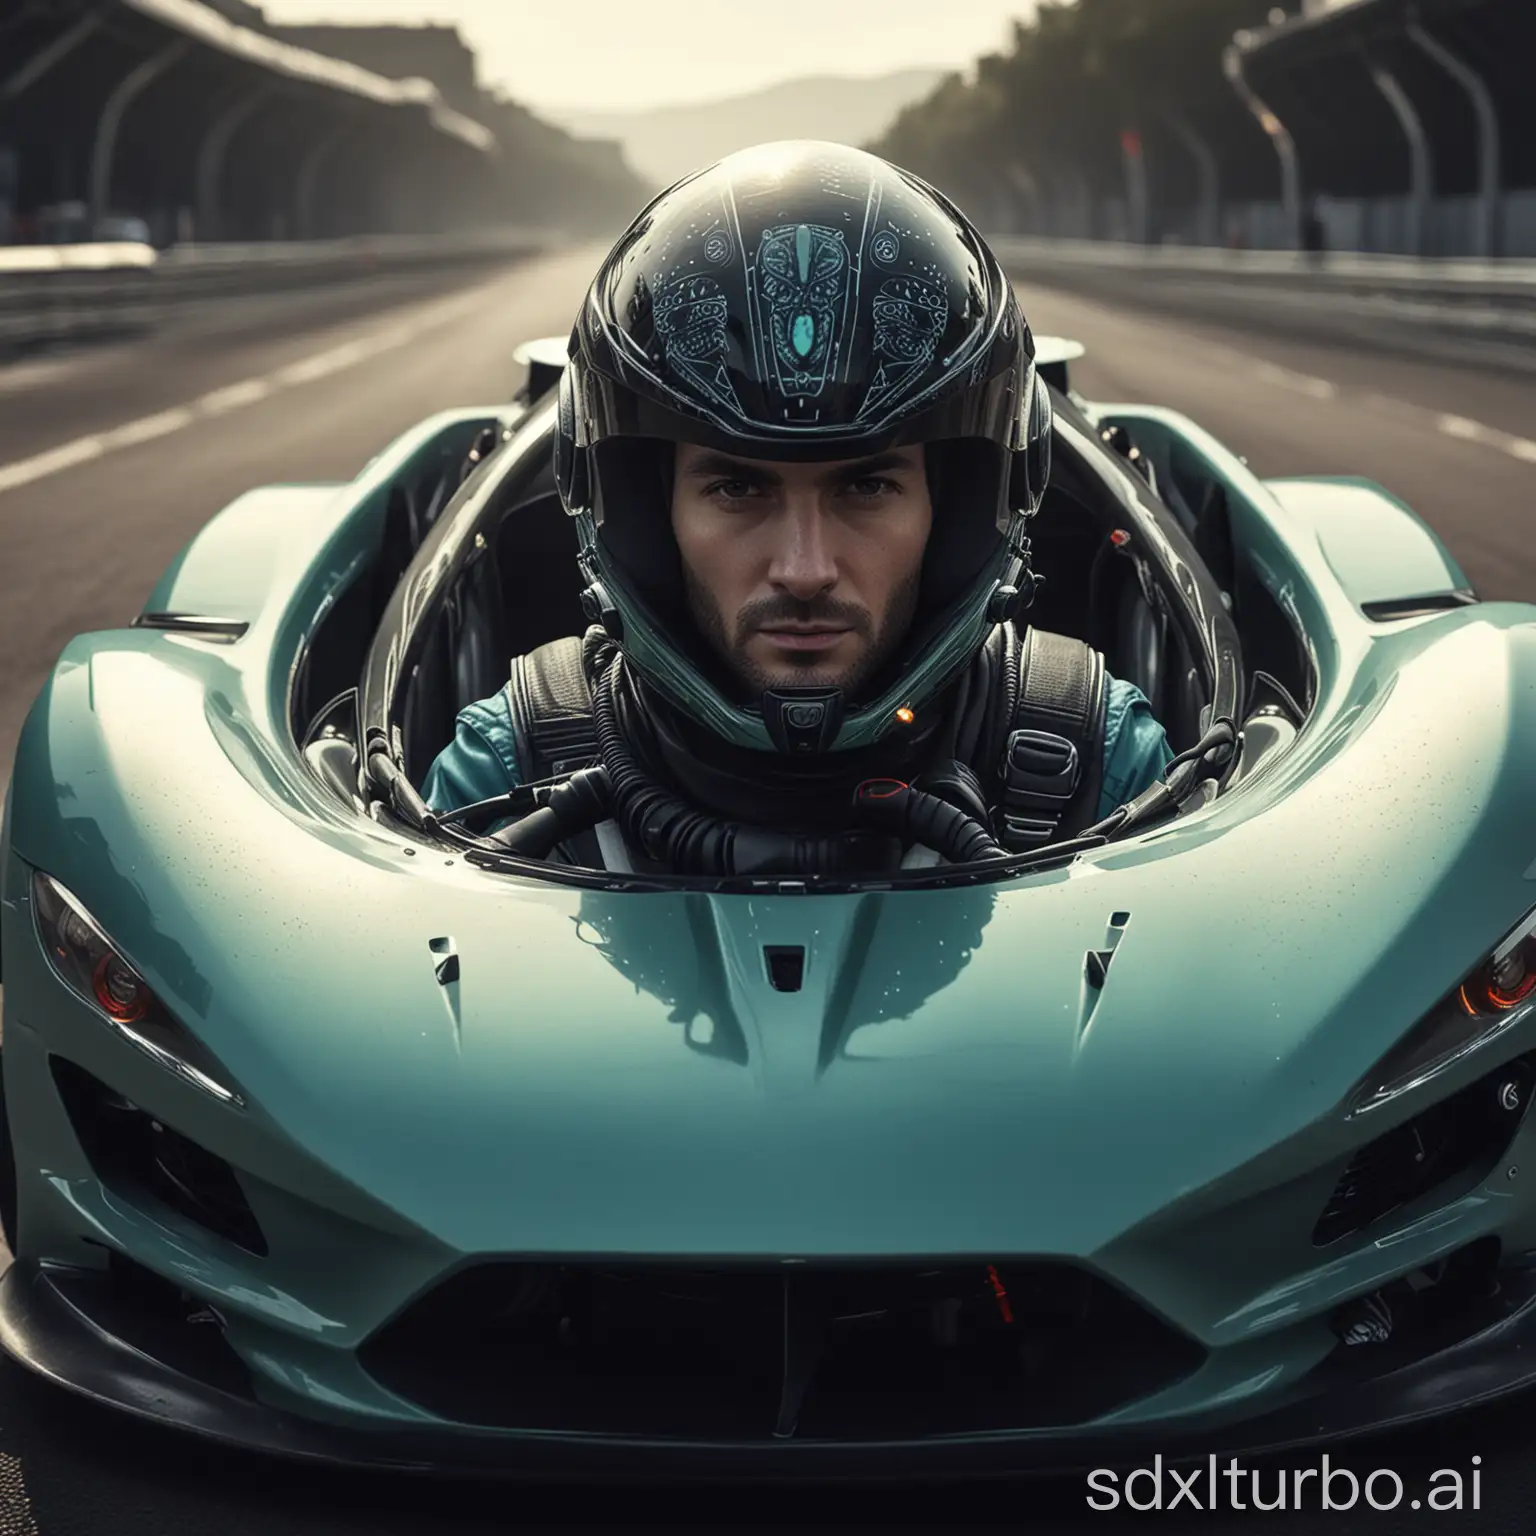 Futuristic-GT-Race-Car-Pilot-Wearing-Alien-Helmet